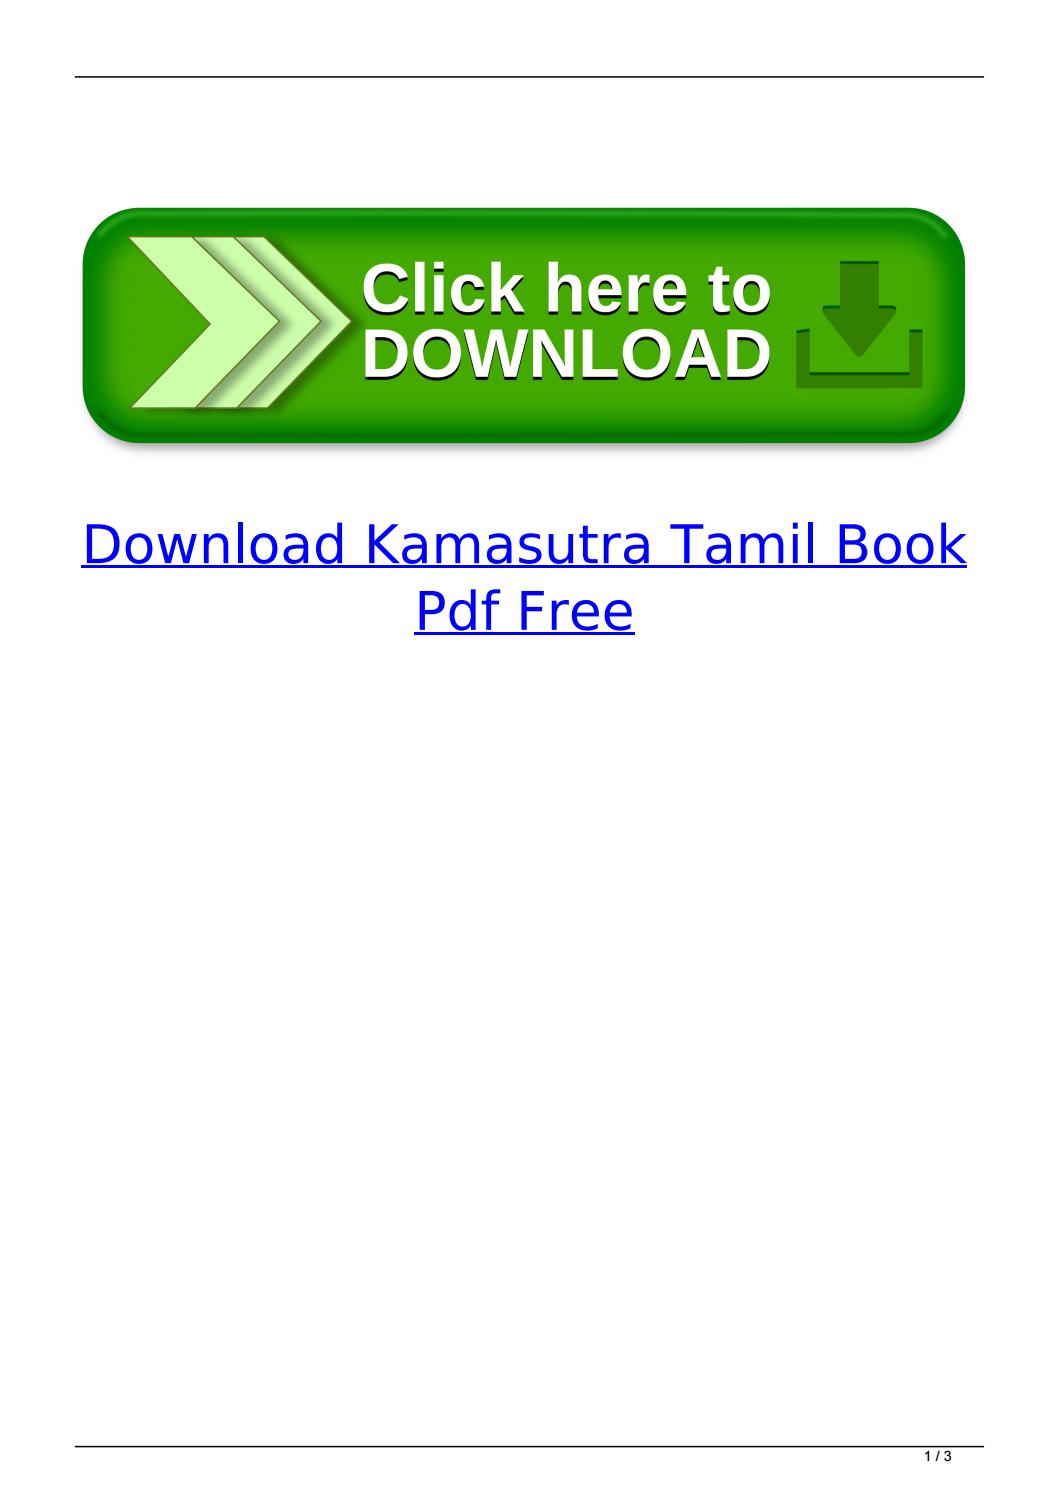 Kaamasutra Book Pdf In Tamil Free Download